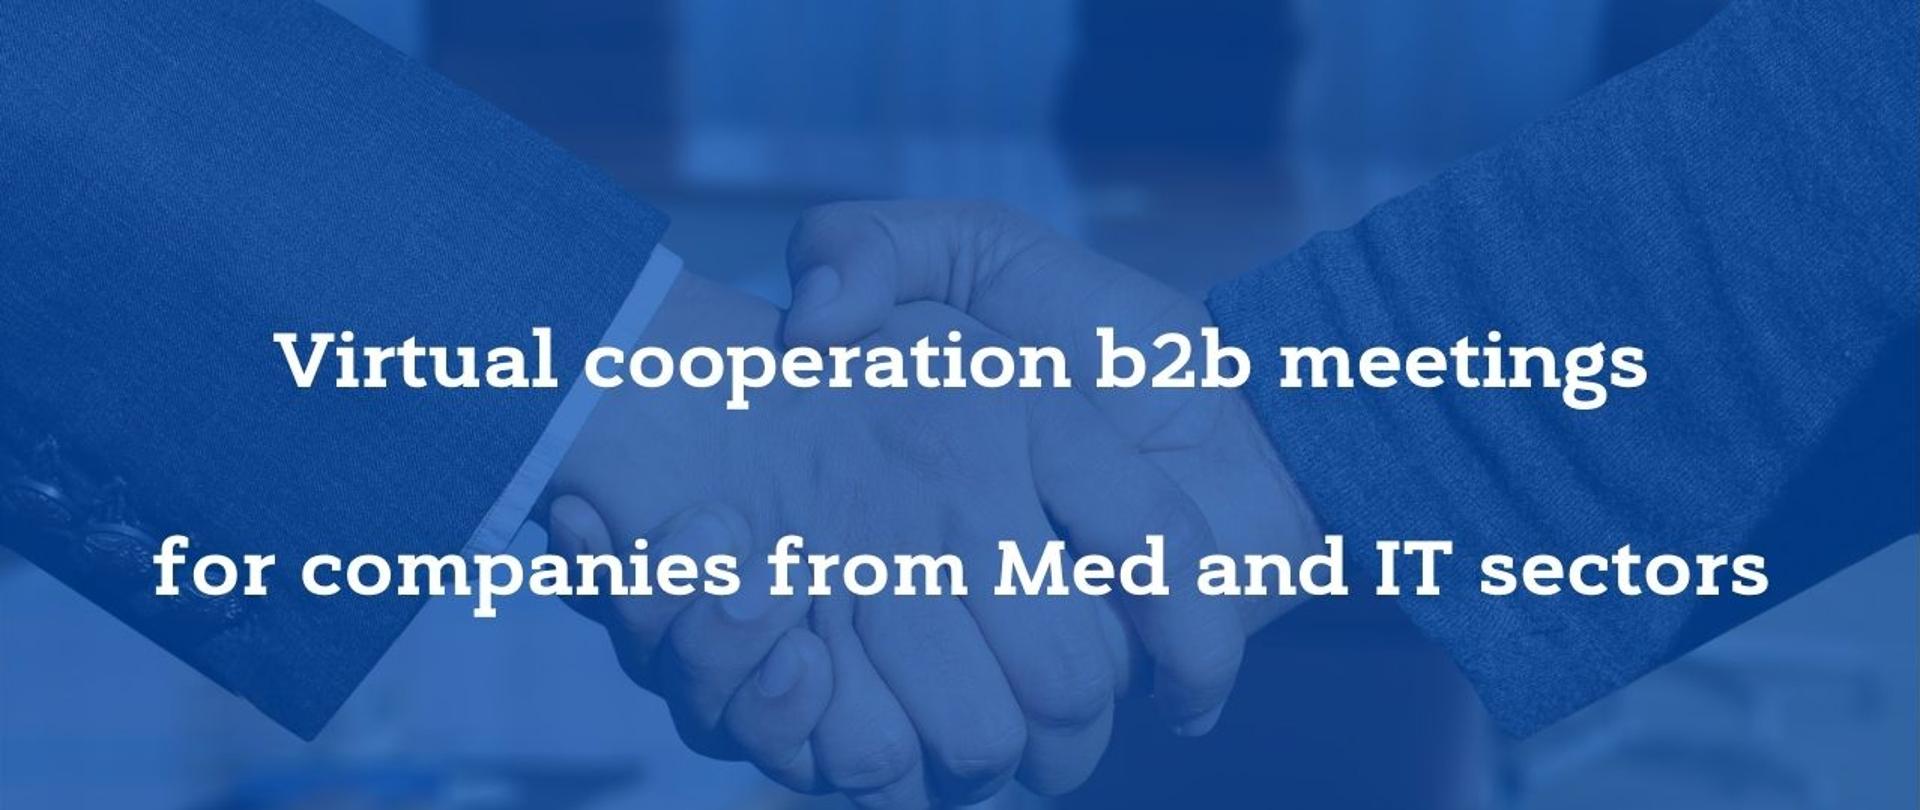 Virtual cooperation b2b meetings